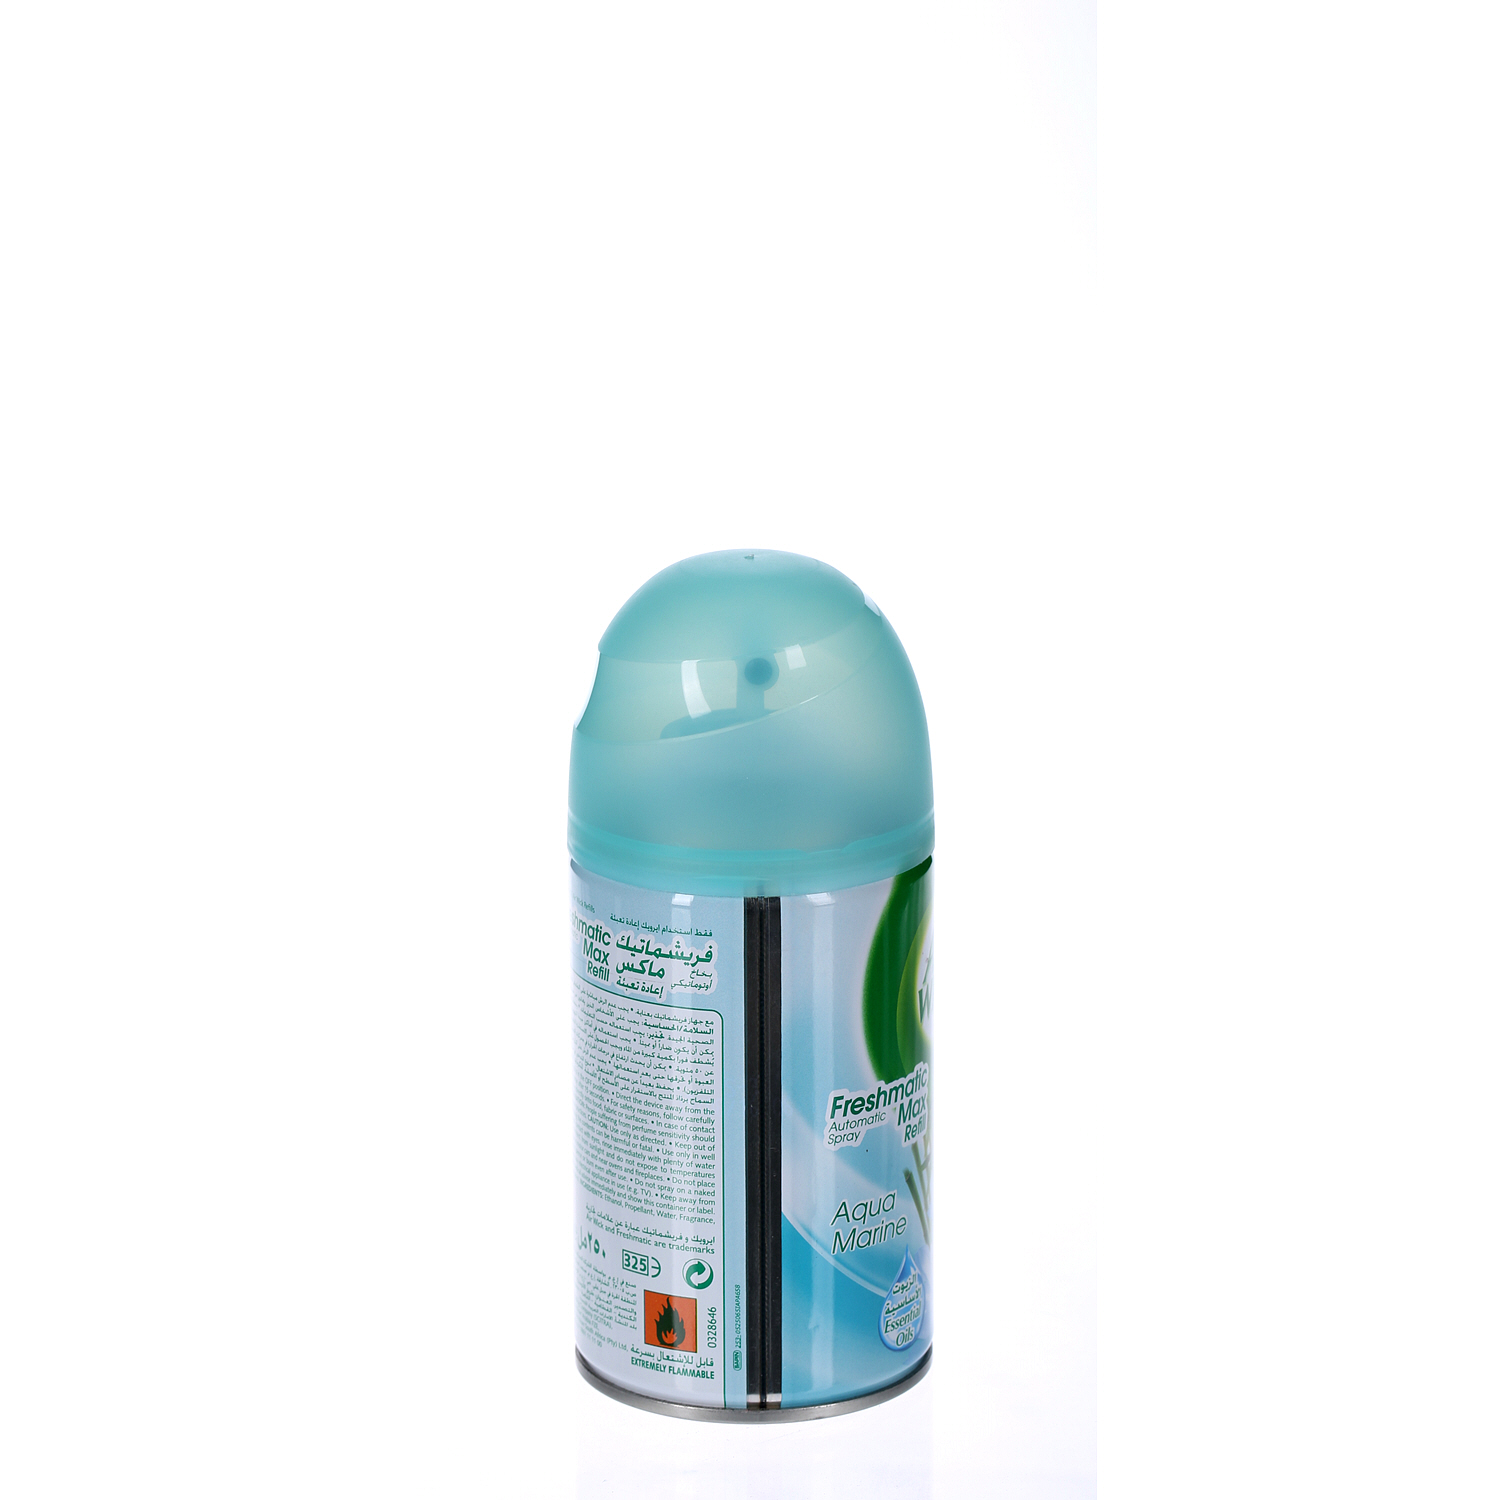 Air Wick Freshmatic Max Refill Aqua marine Refill 250 ml